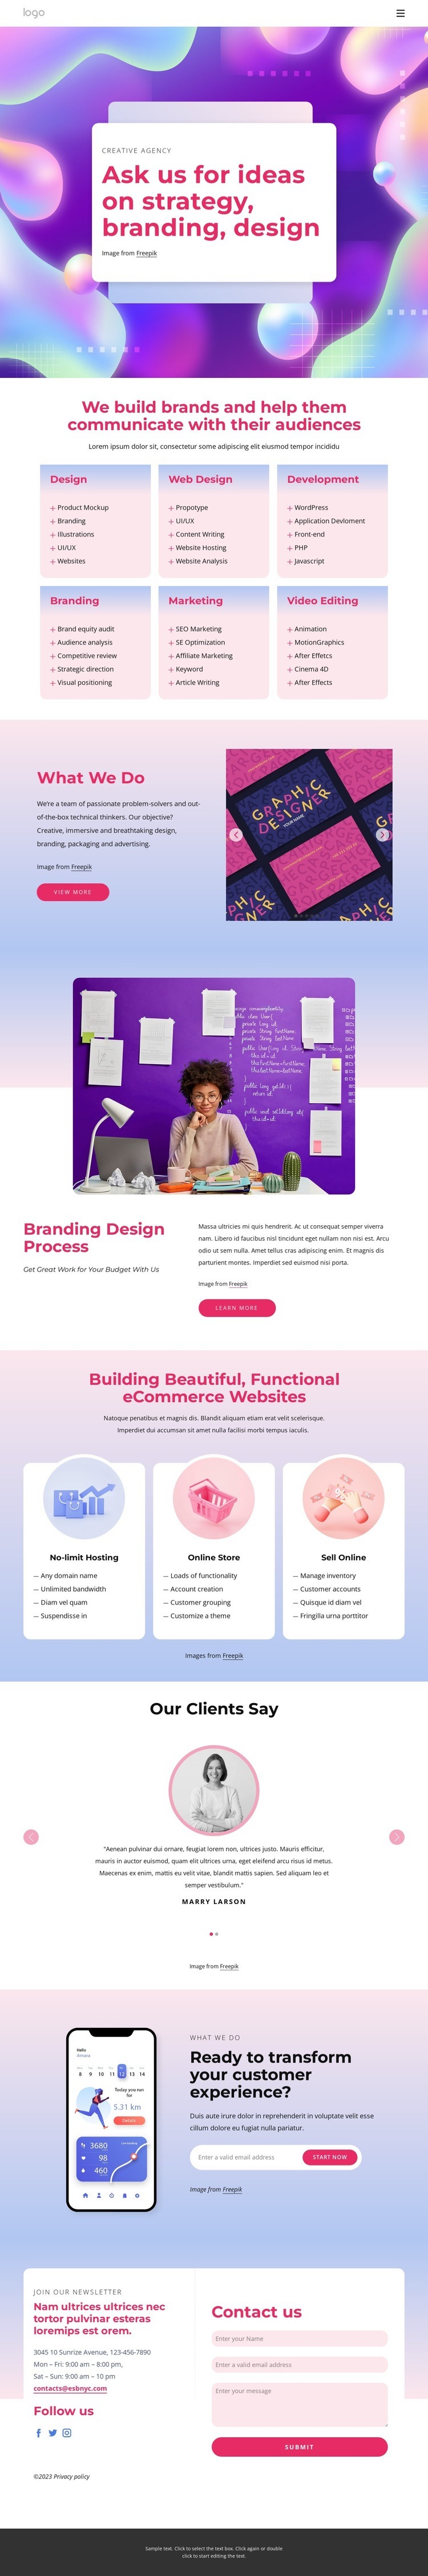 Branding, strategy and multidisciplinary design studio Web Page Design